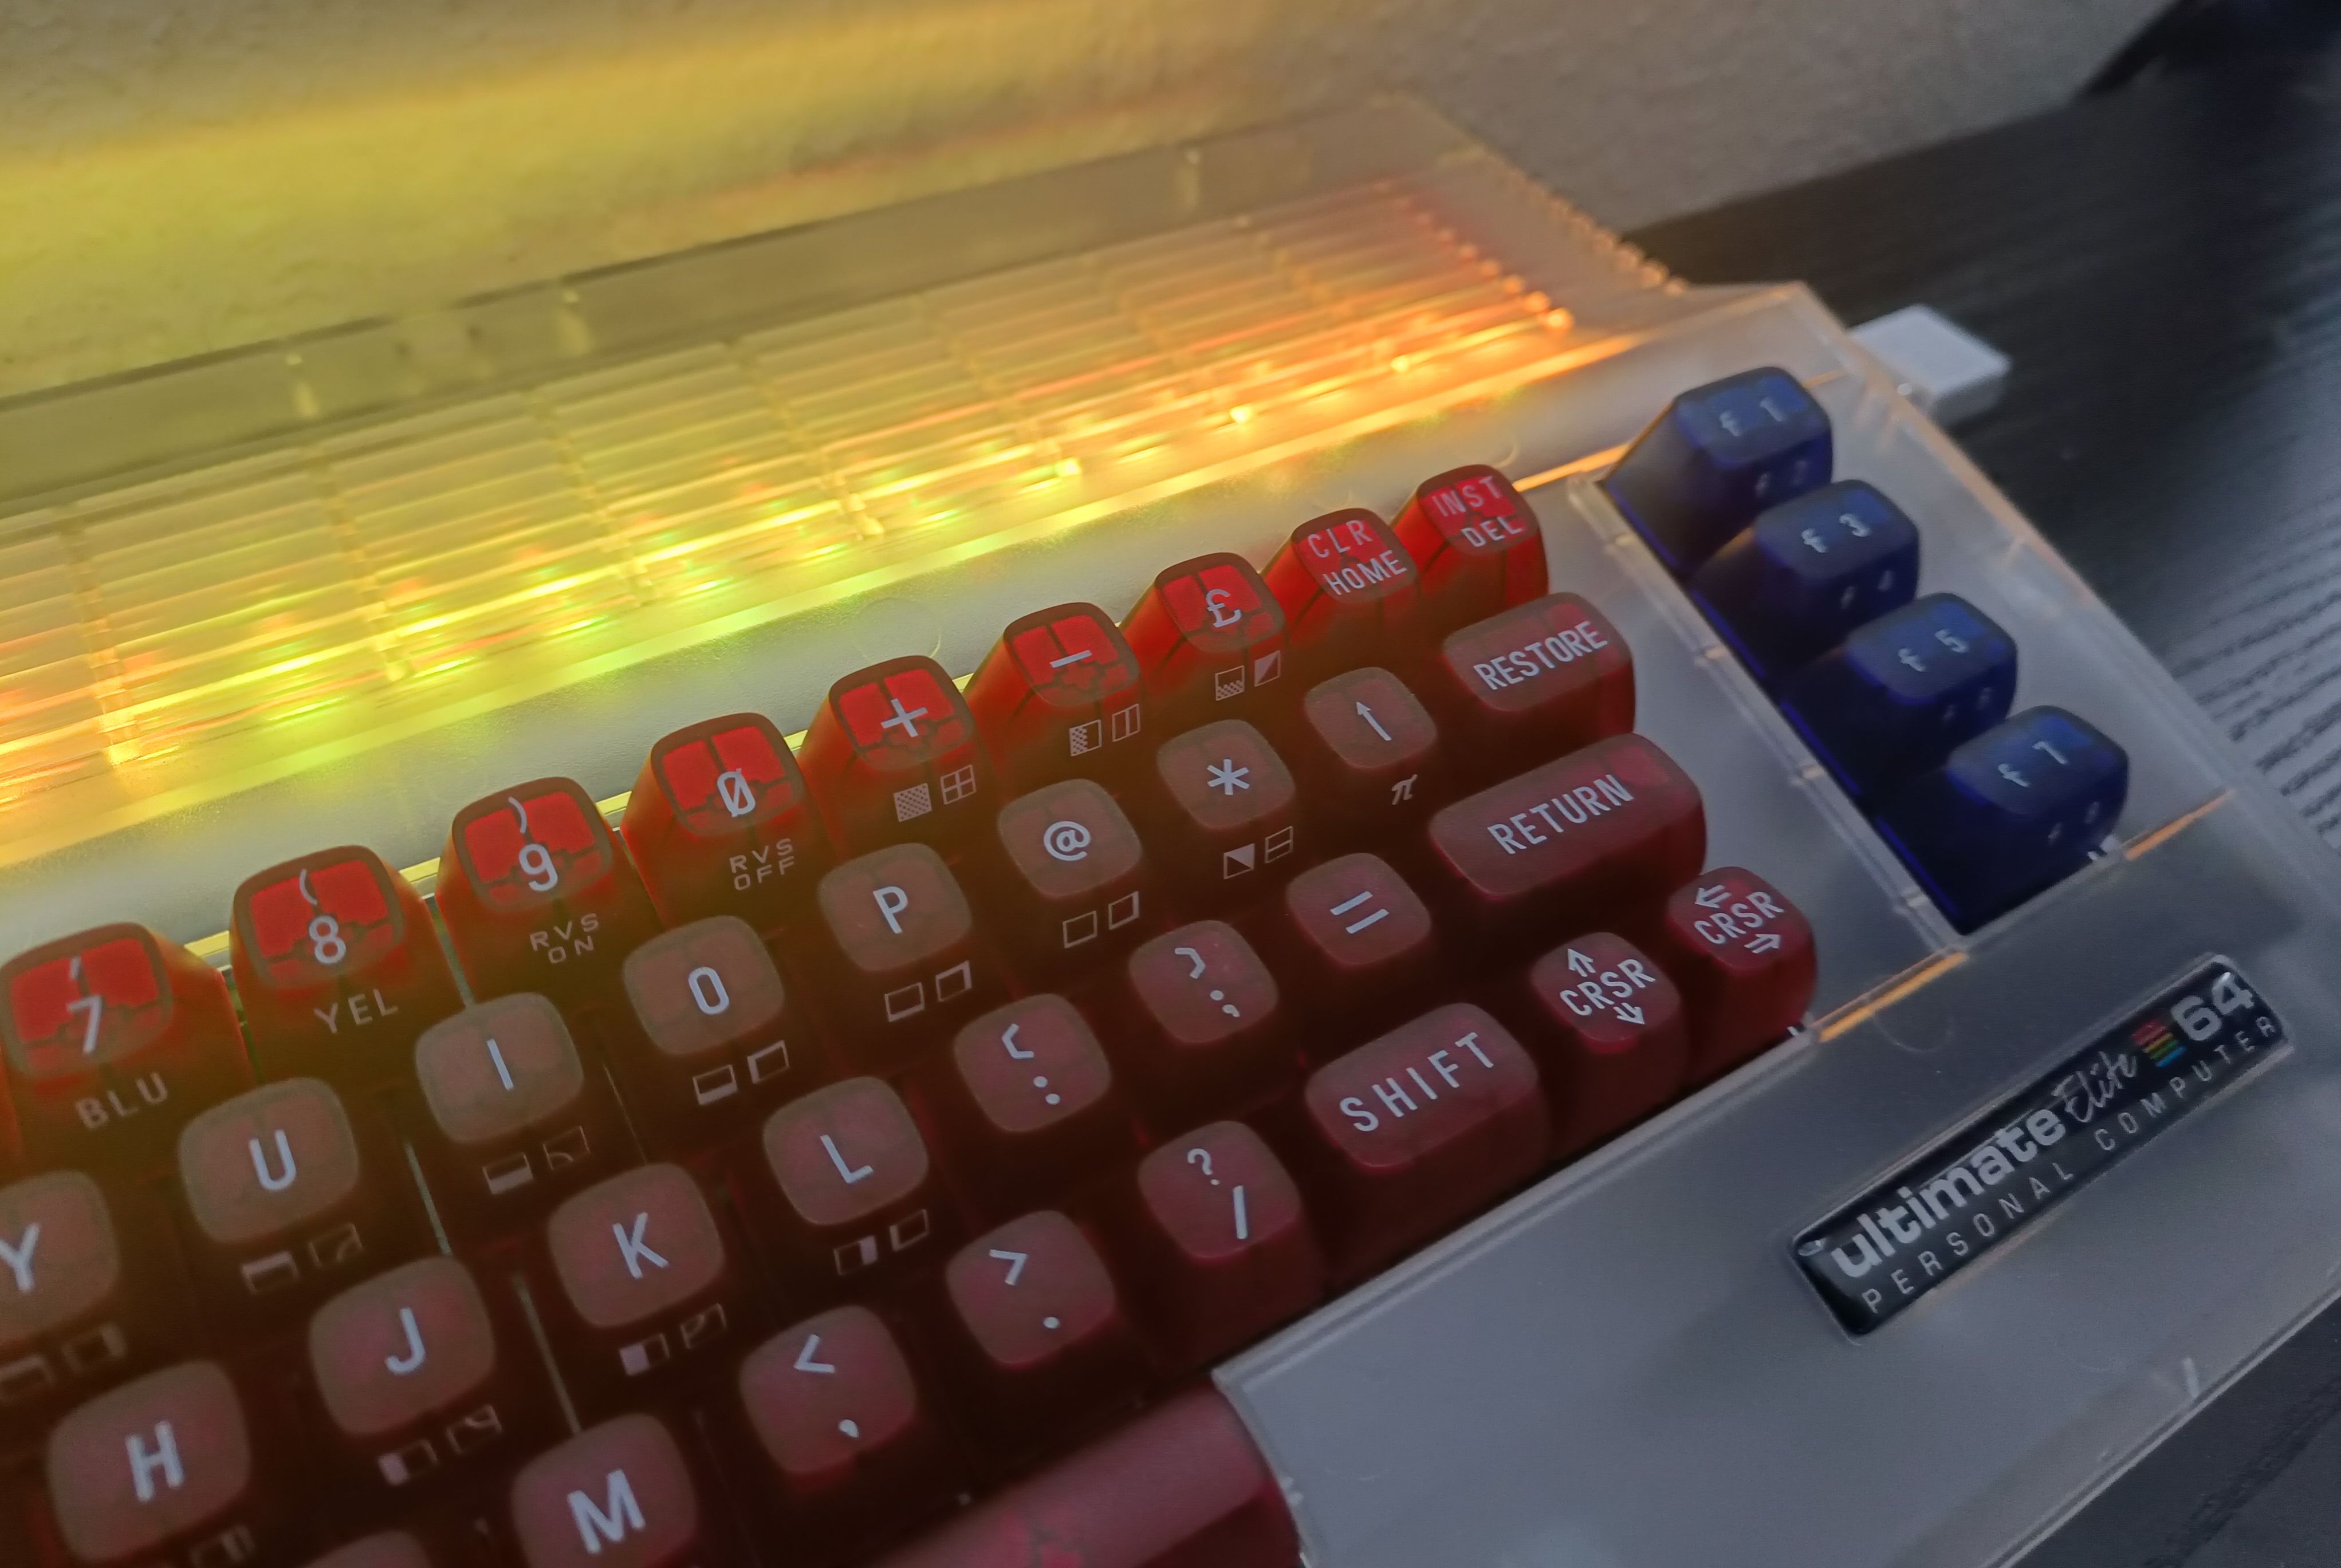 Den store Commodore 64-tråd